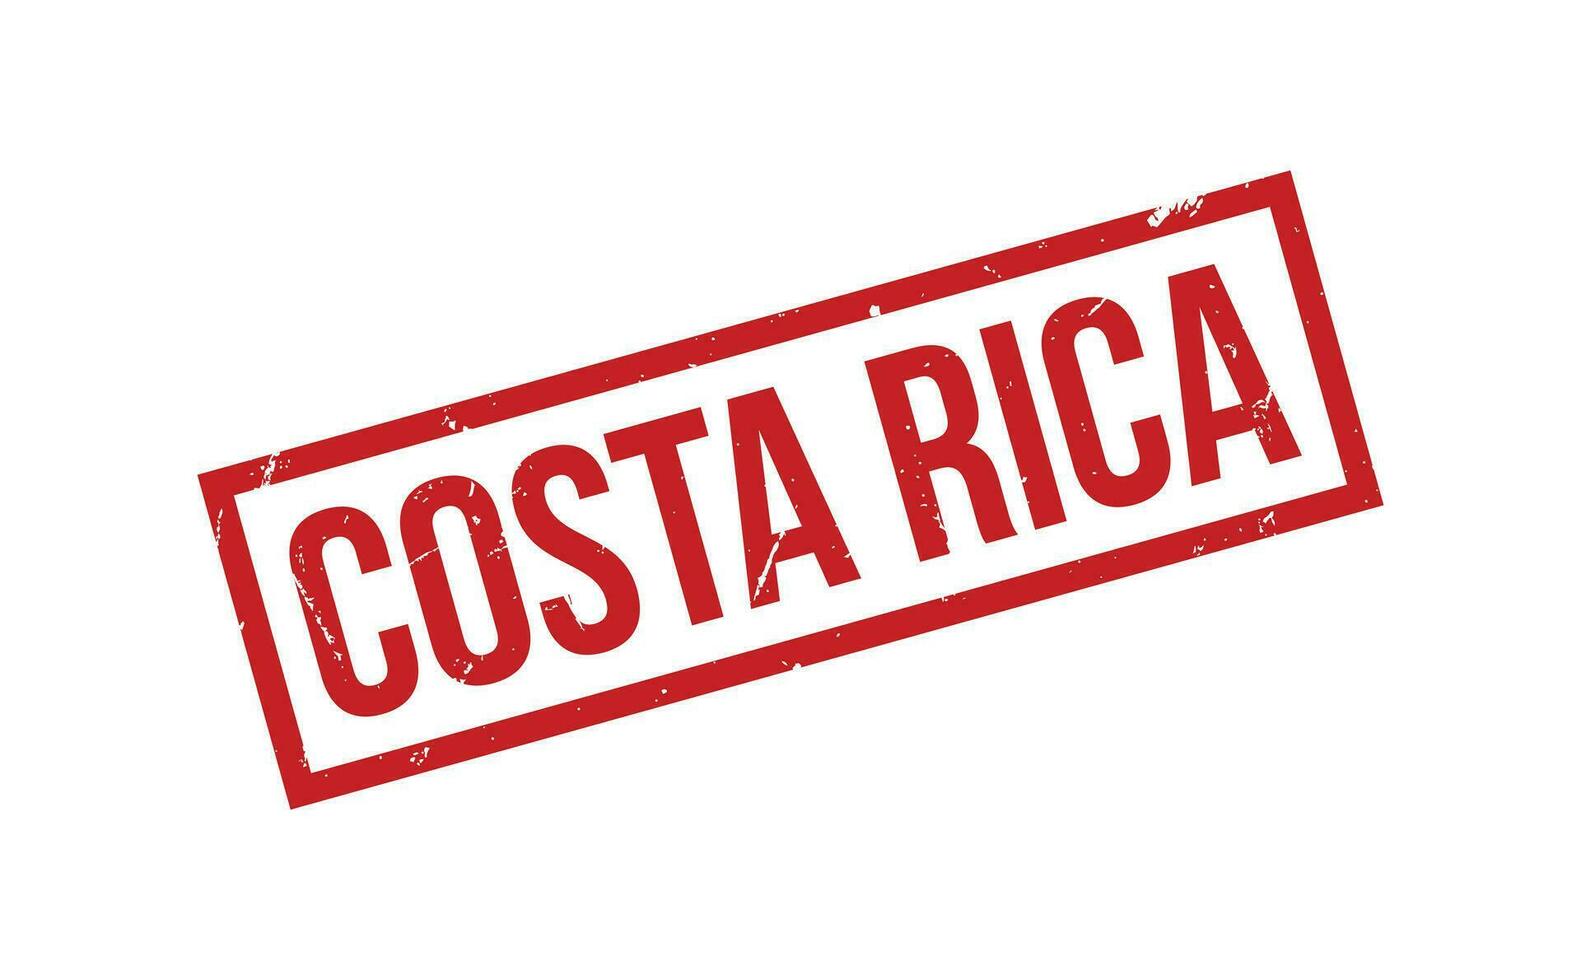 Costa Rica Gummi Briefmarke Siegel Vektor